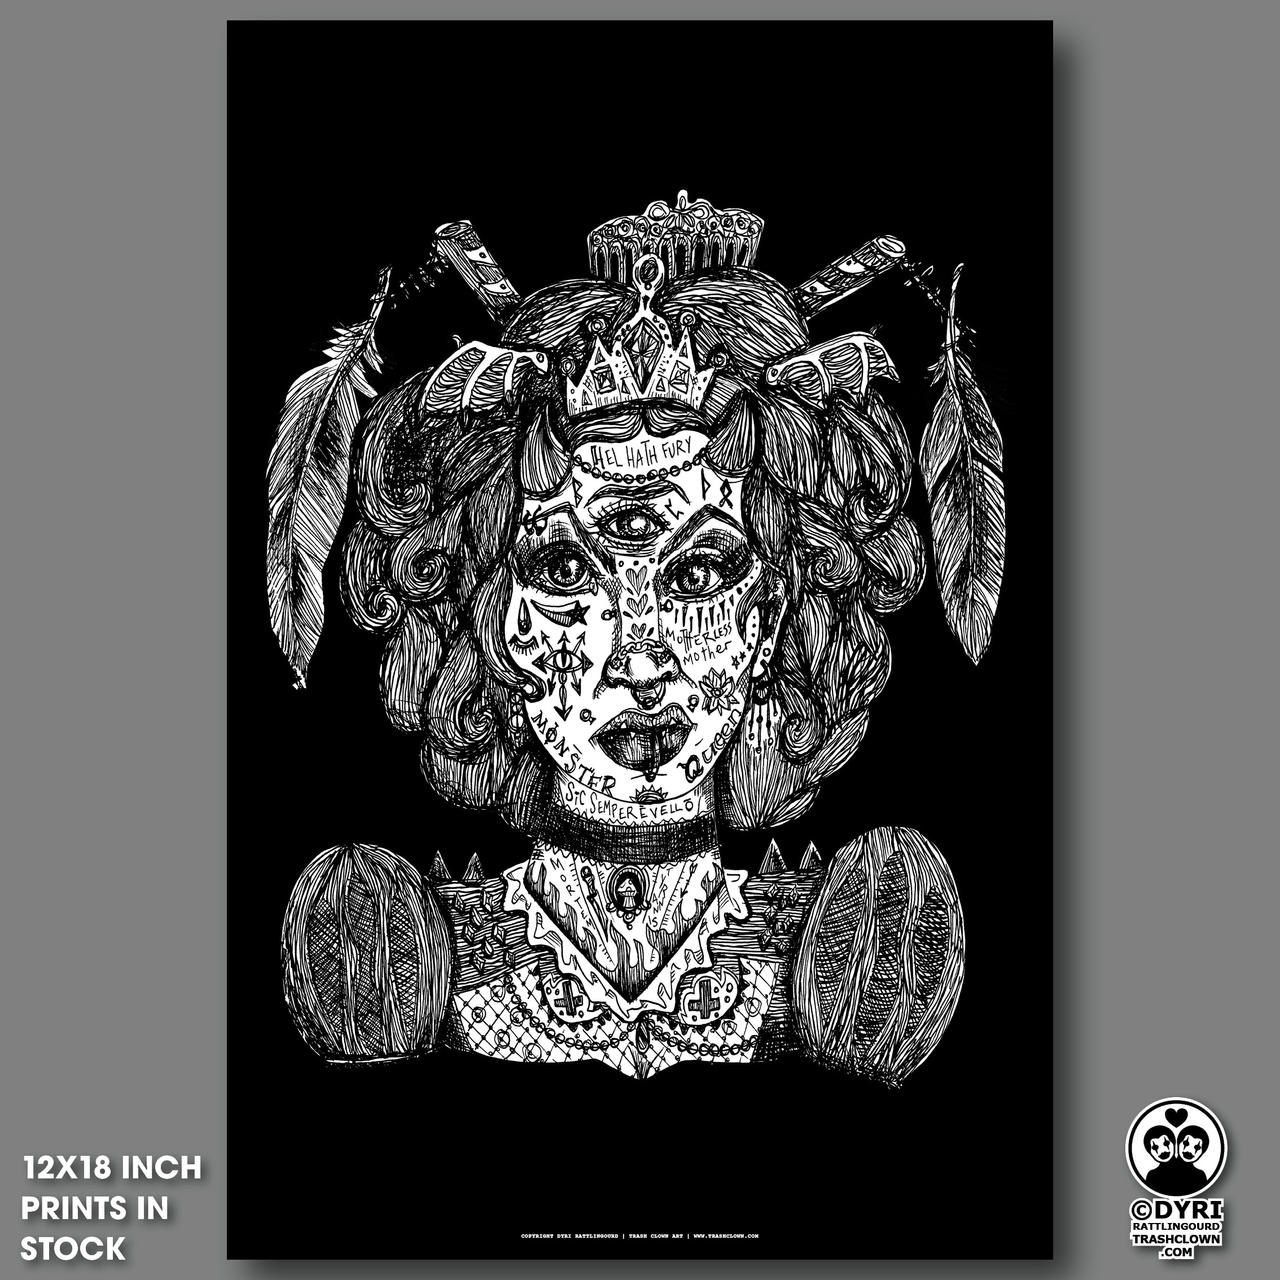 Monster Queen (12x18 Prints Available) by trashclownart on DeviantArt